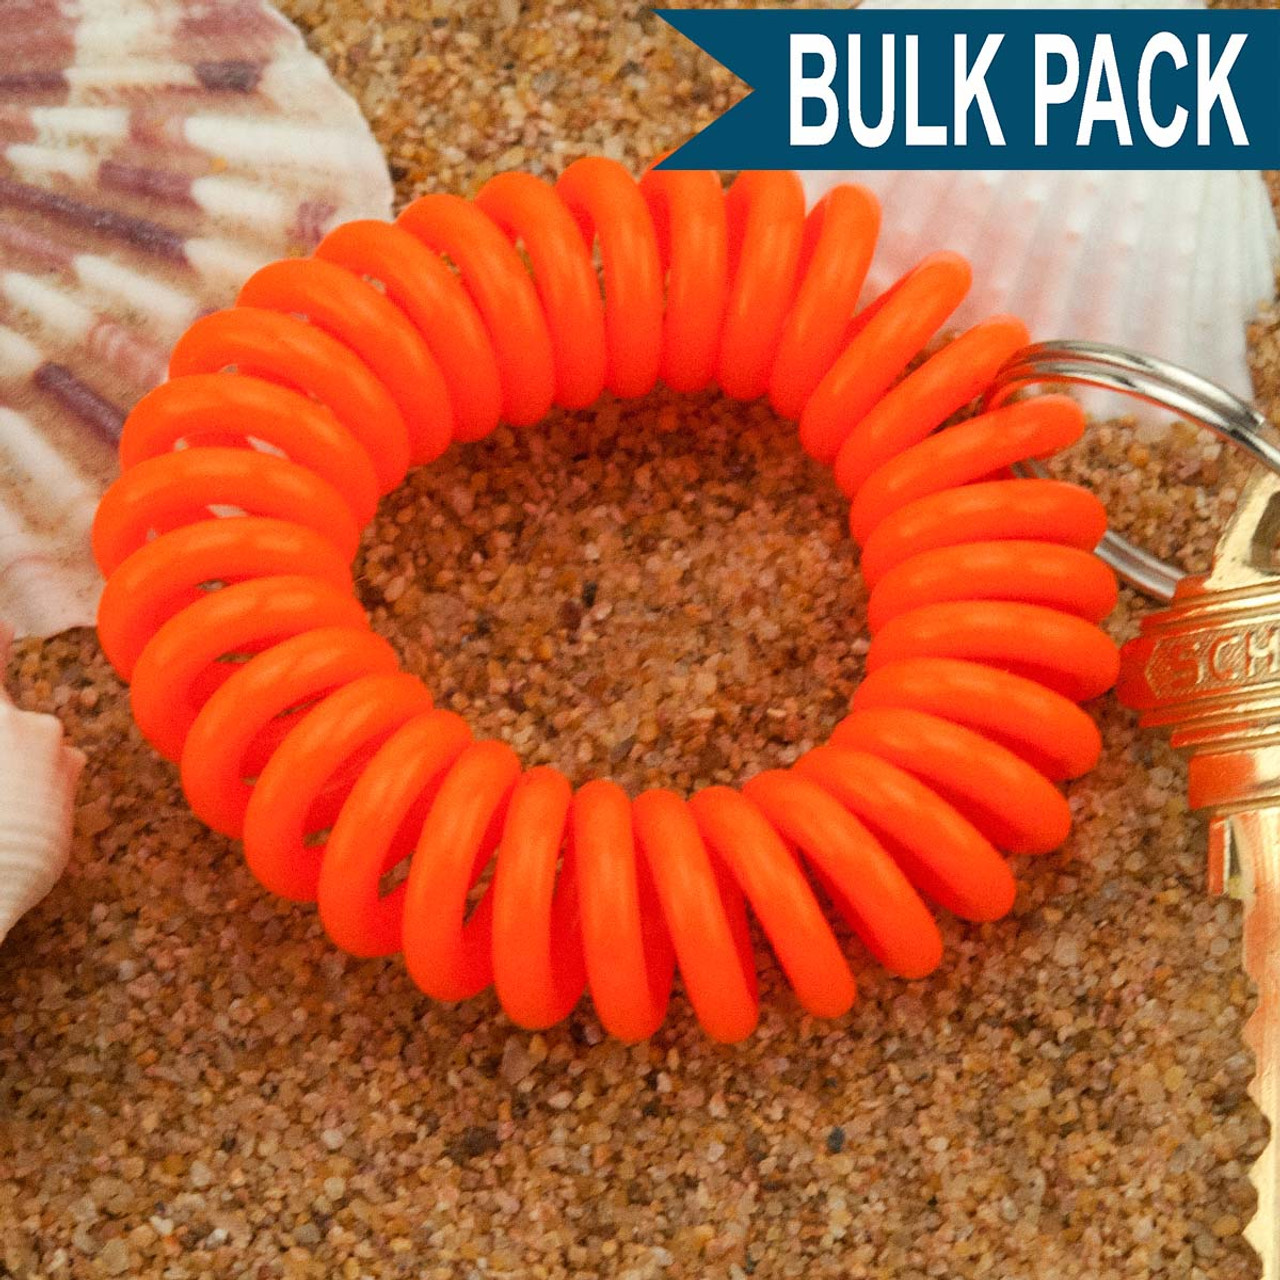 Orange Wrist Coil Spiral Keyring - 12 Pc. Bulk Pack